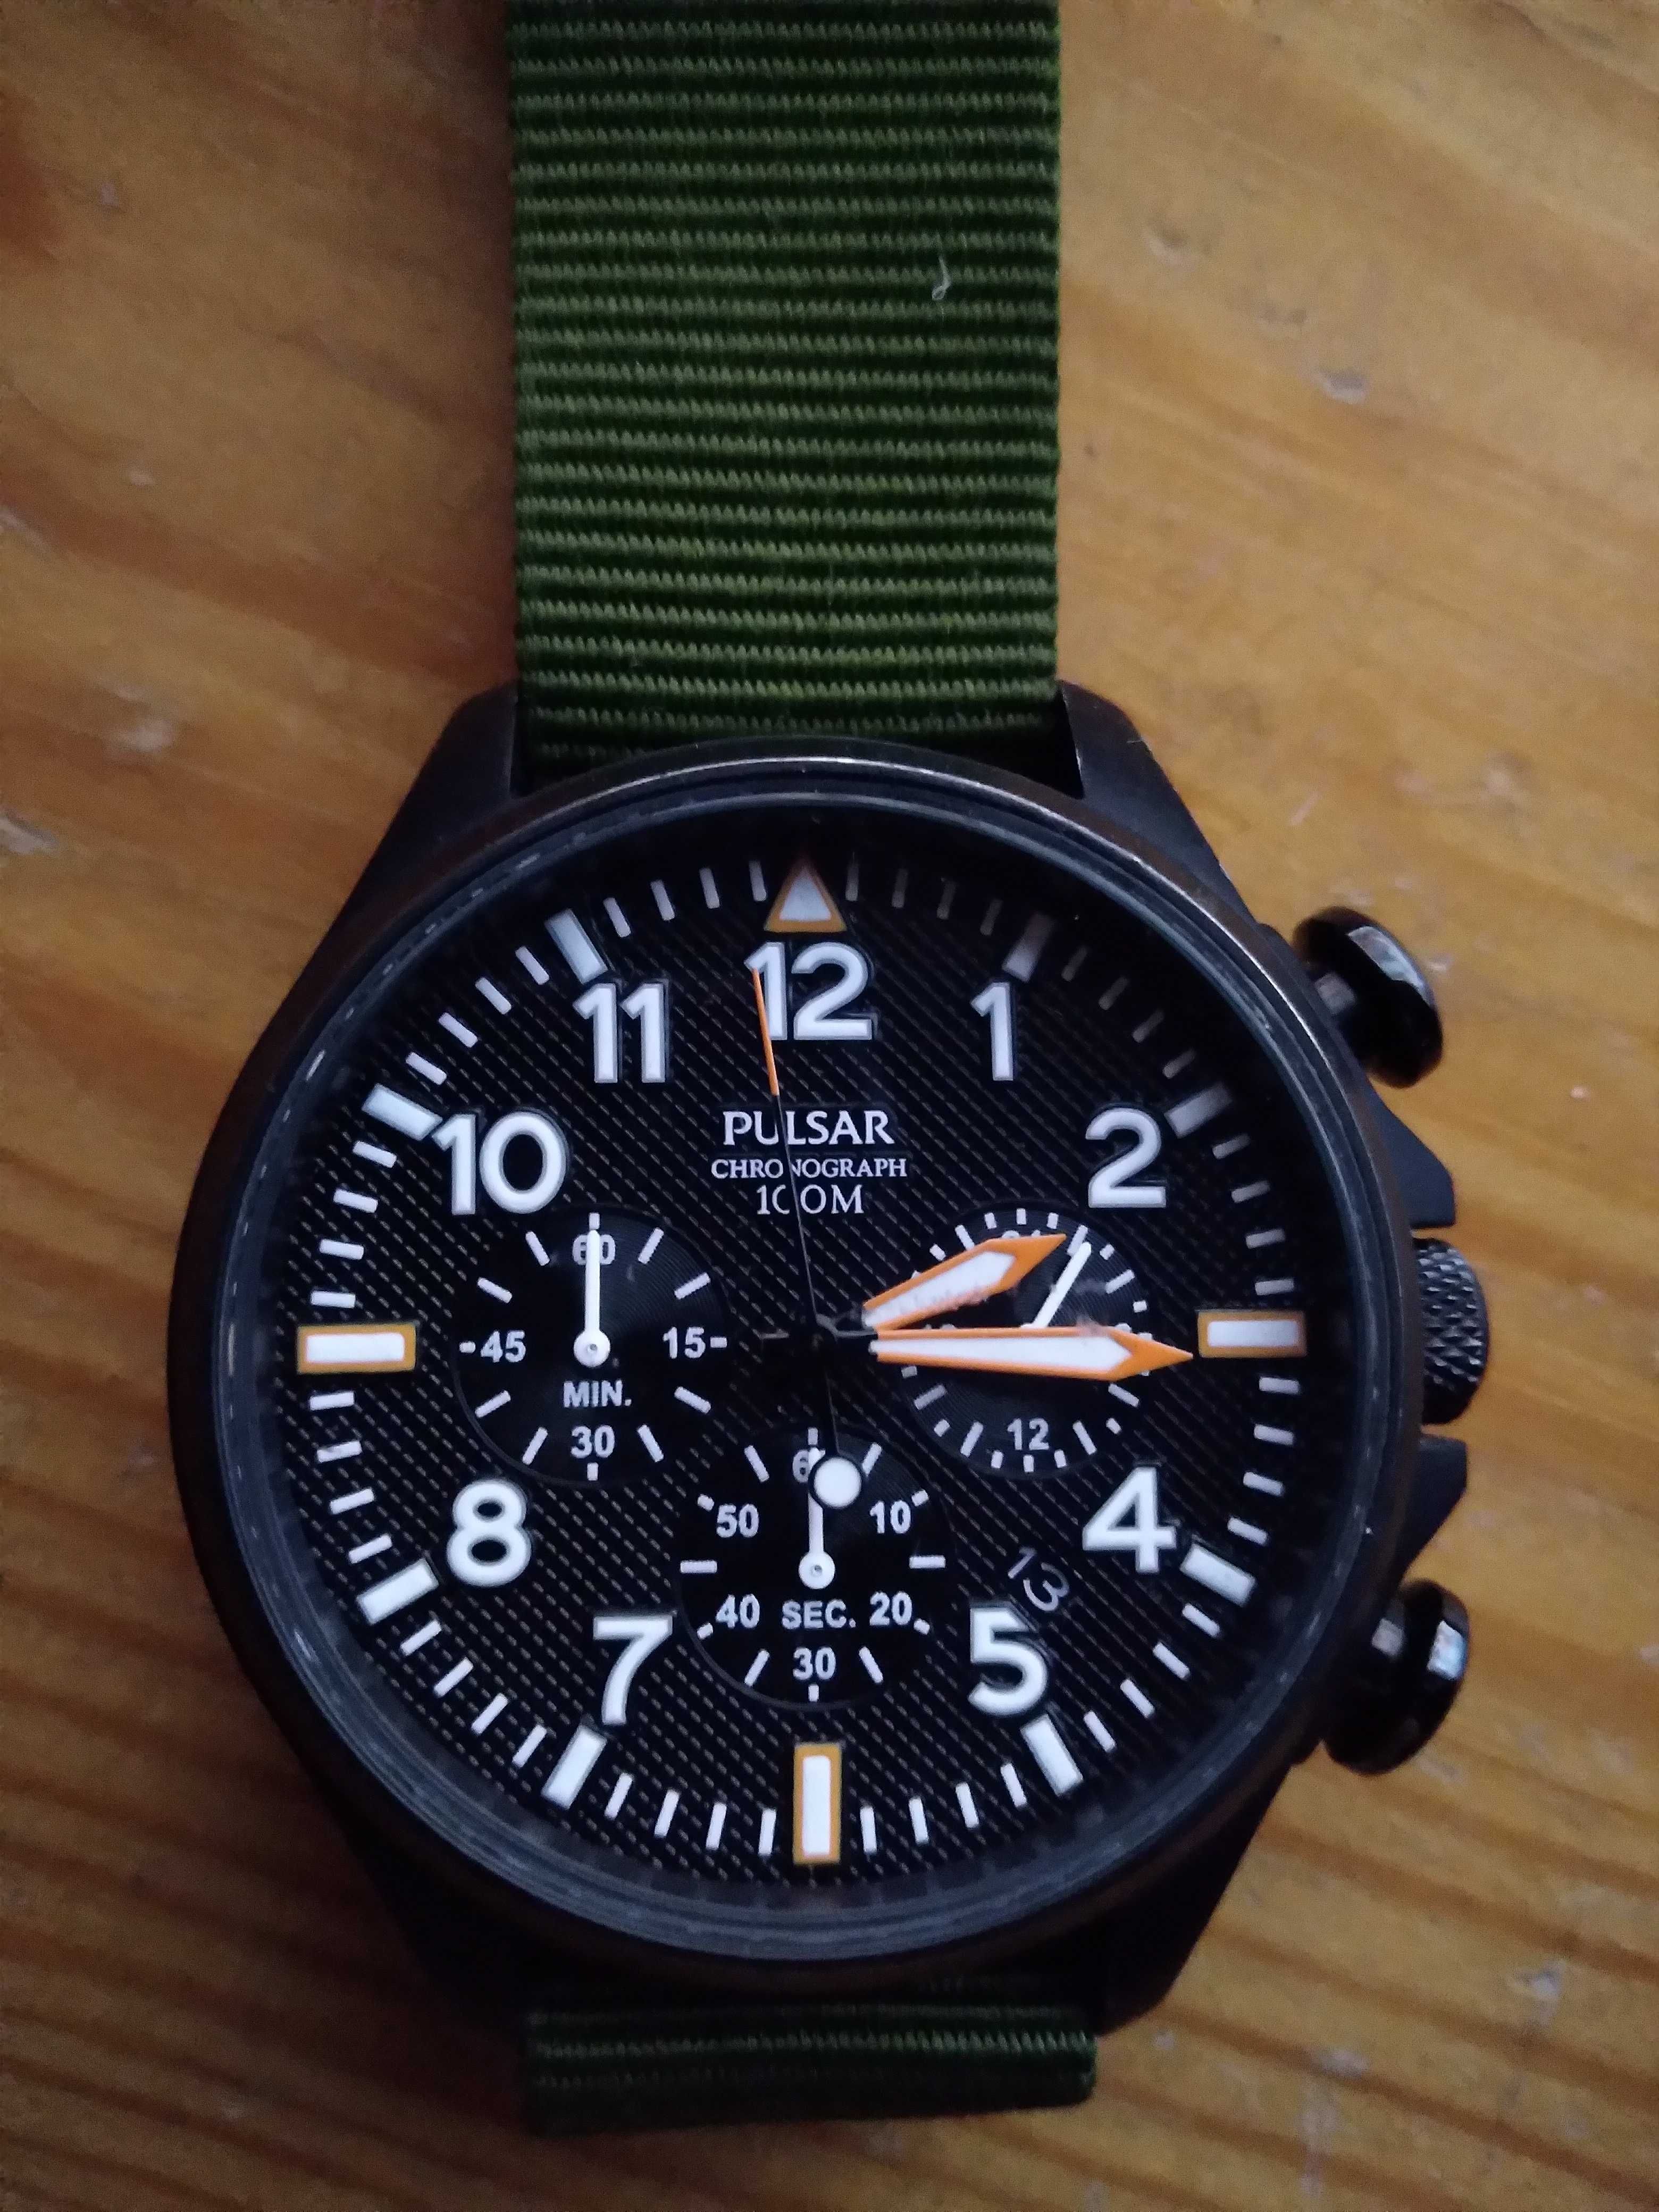 Zegarek Pulsar by Seiko military na Japonie100wr.chronograf,pasek NATO